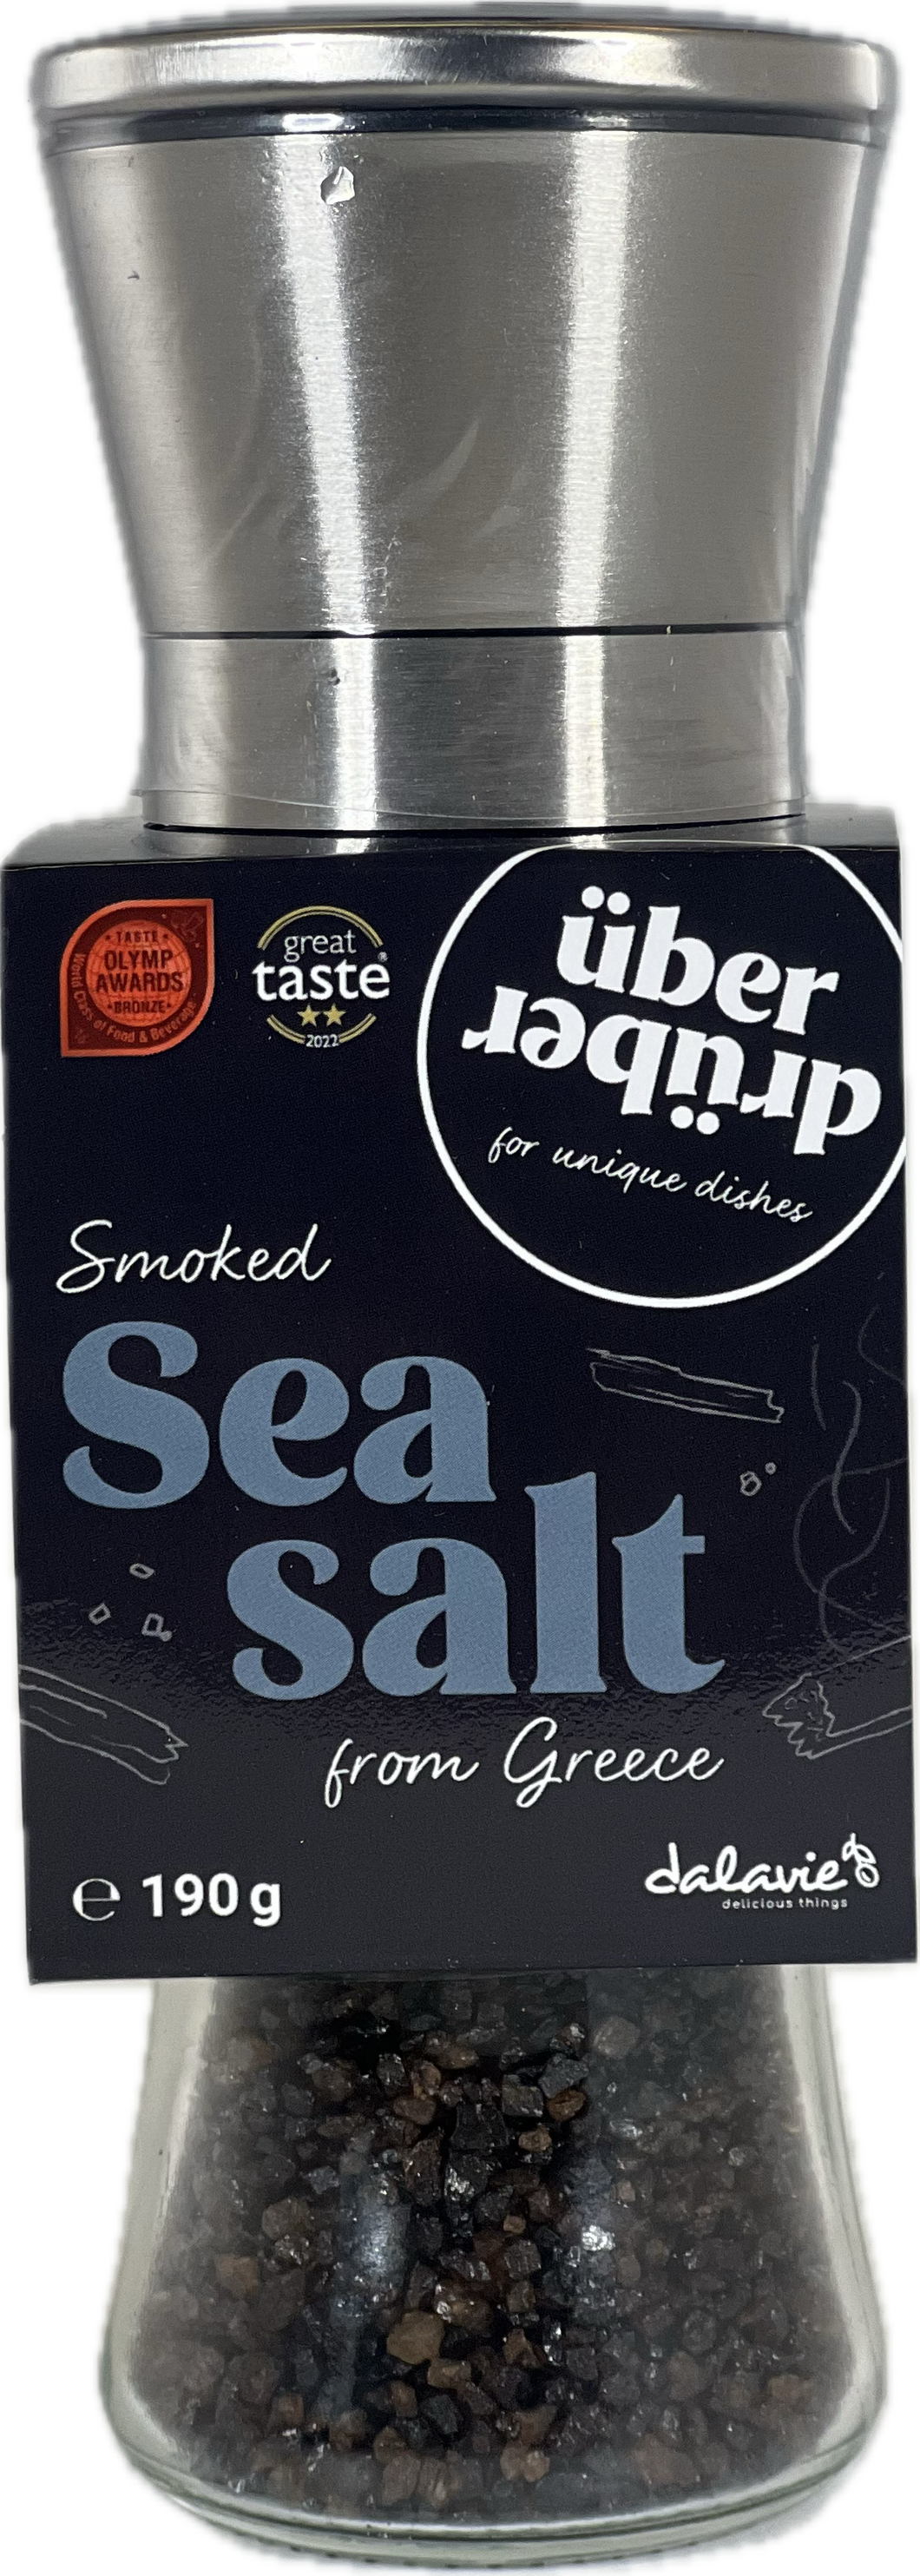 Überdrüber Smoked sea salt